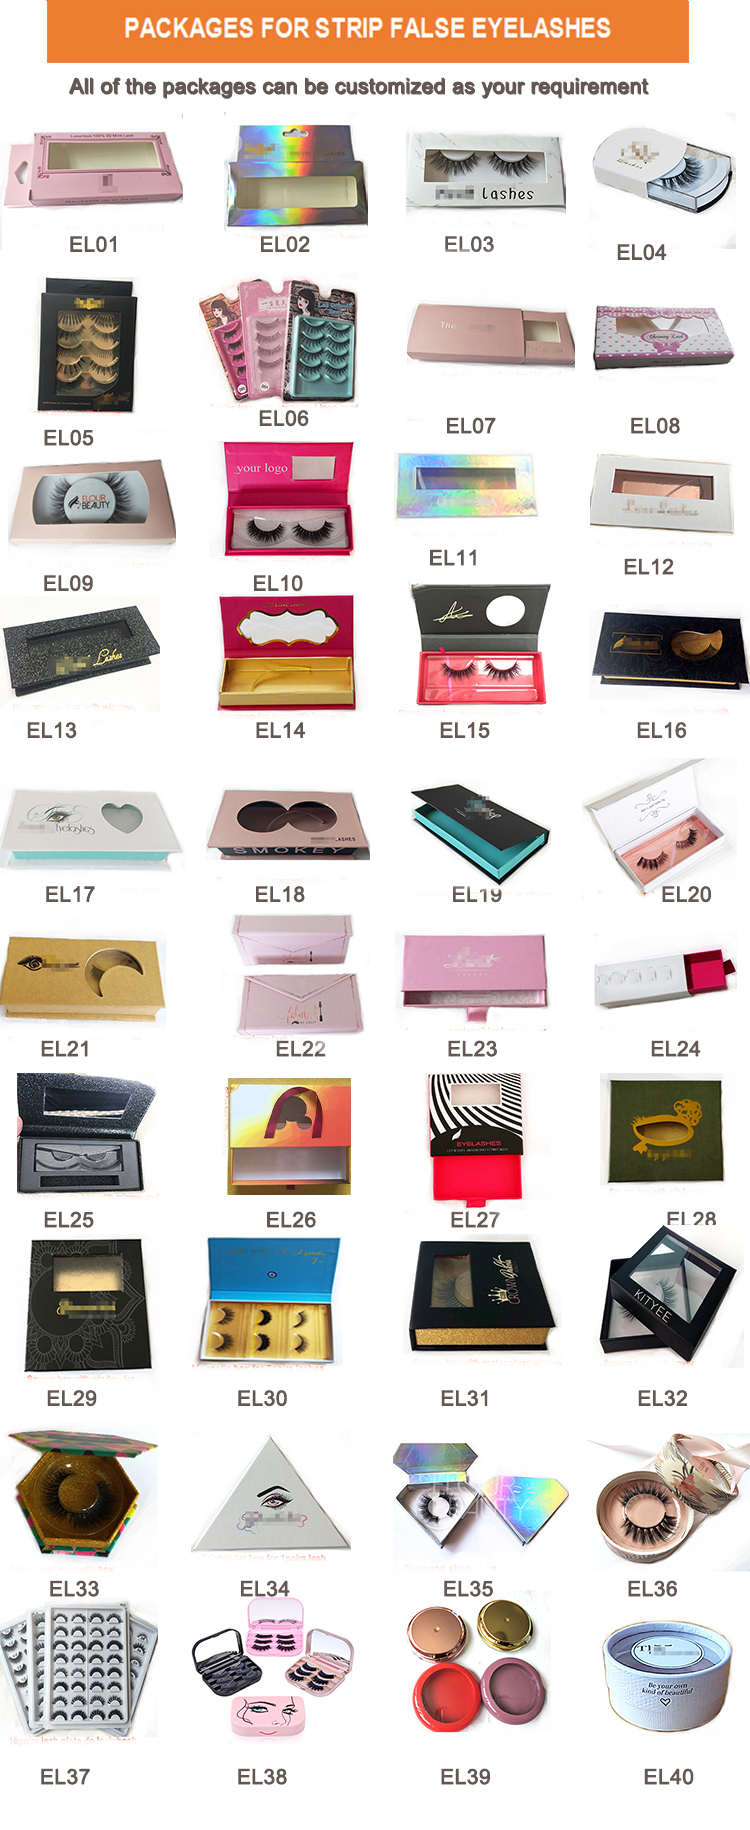 elour lashes private label eyelash package boxes wholesale free design.jpg